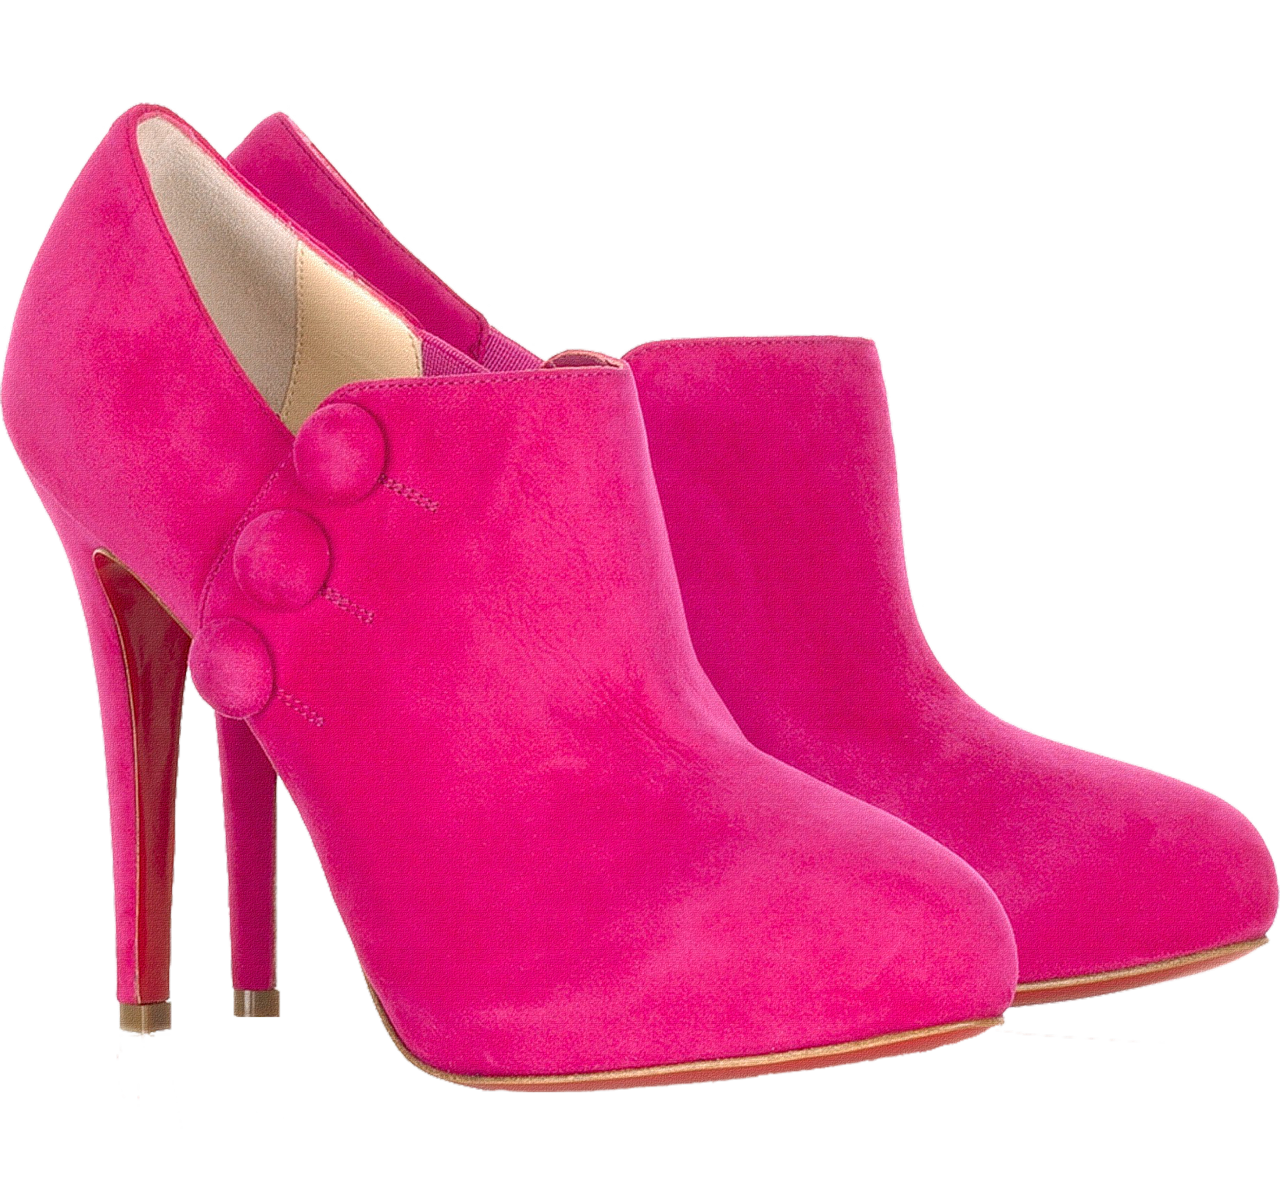 Pink High Heels Shoe Free Download Image PNG Image